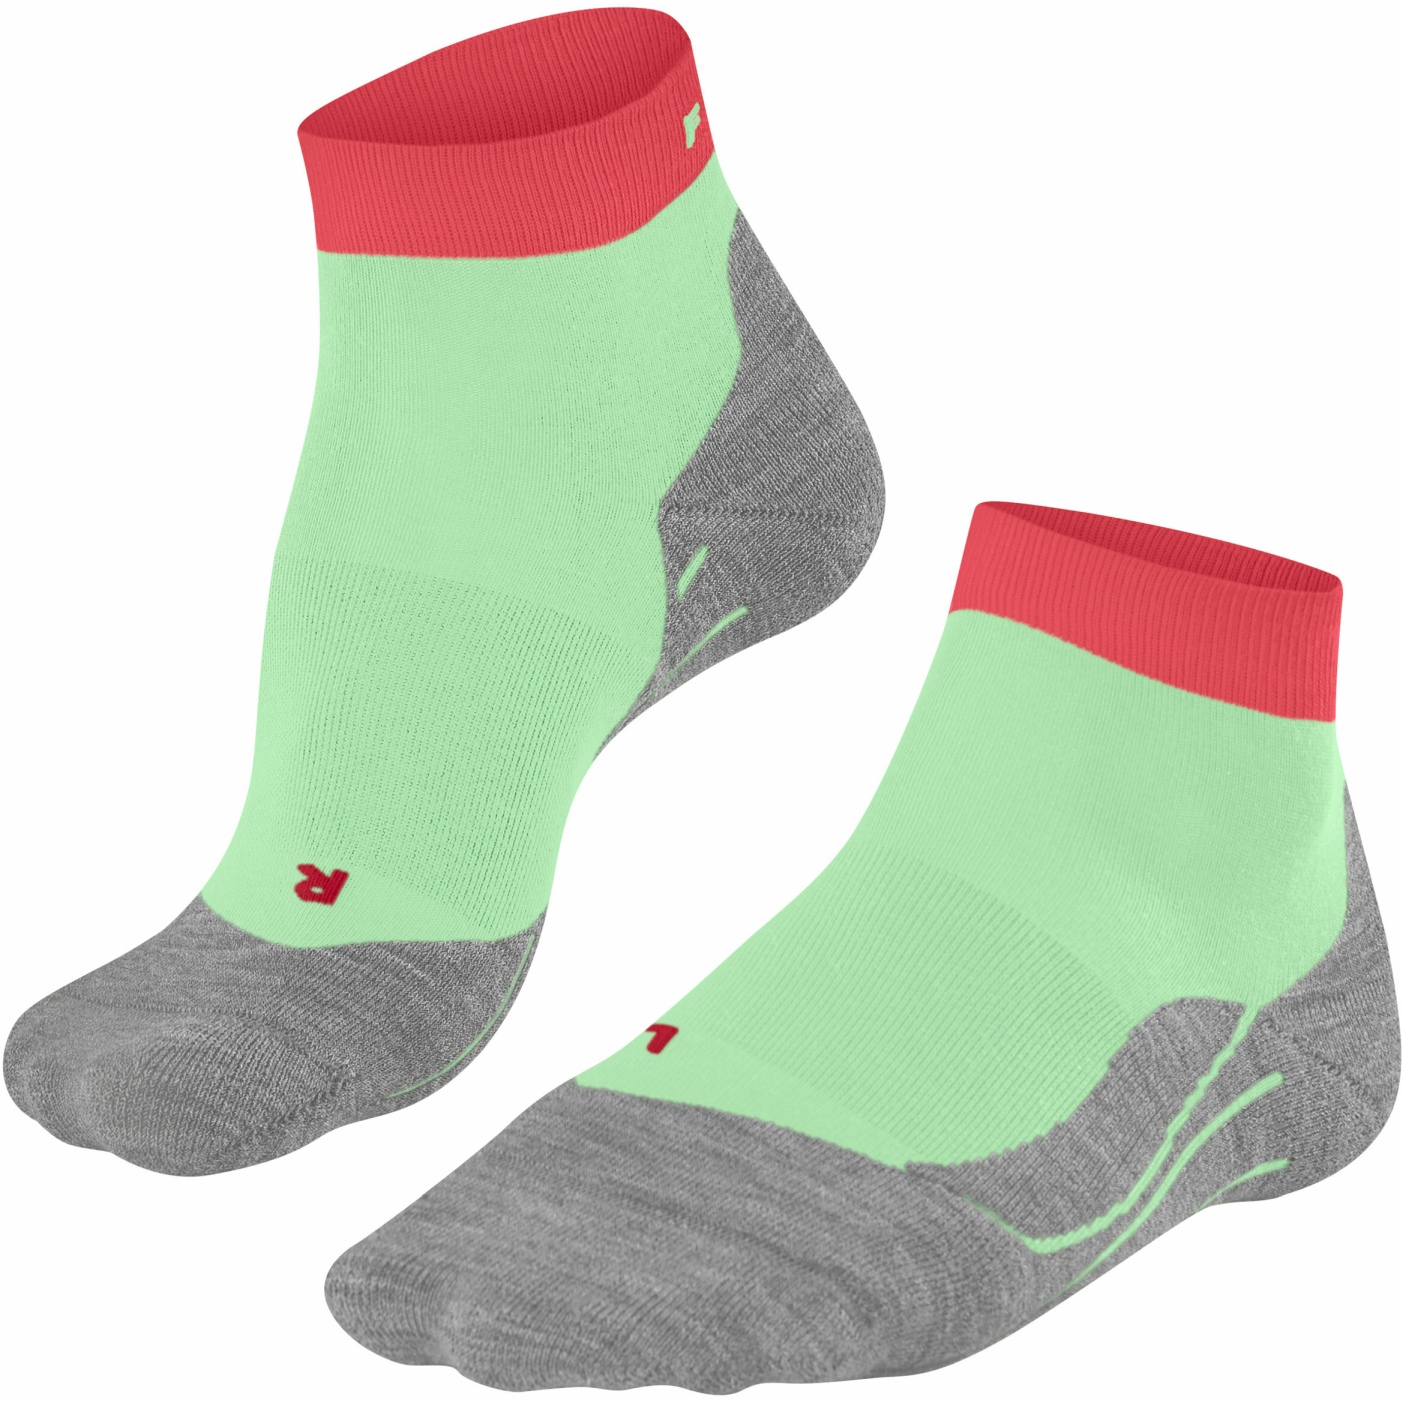 Picture of Falke RU4 Endurance Short Running Socks Women - neo mint 7133